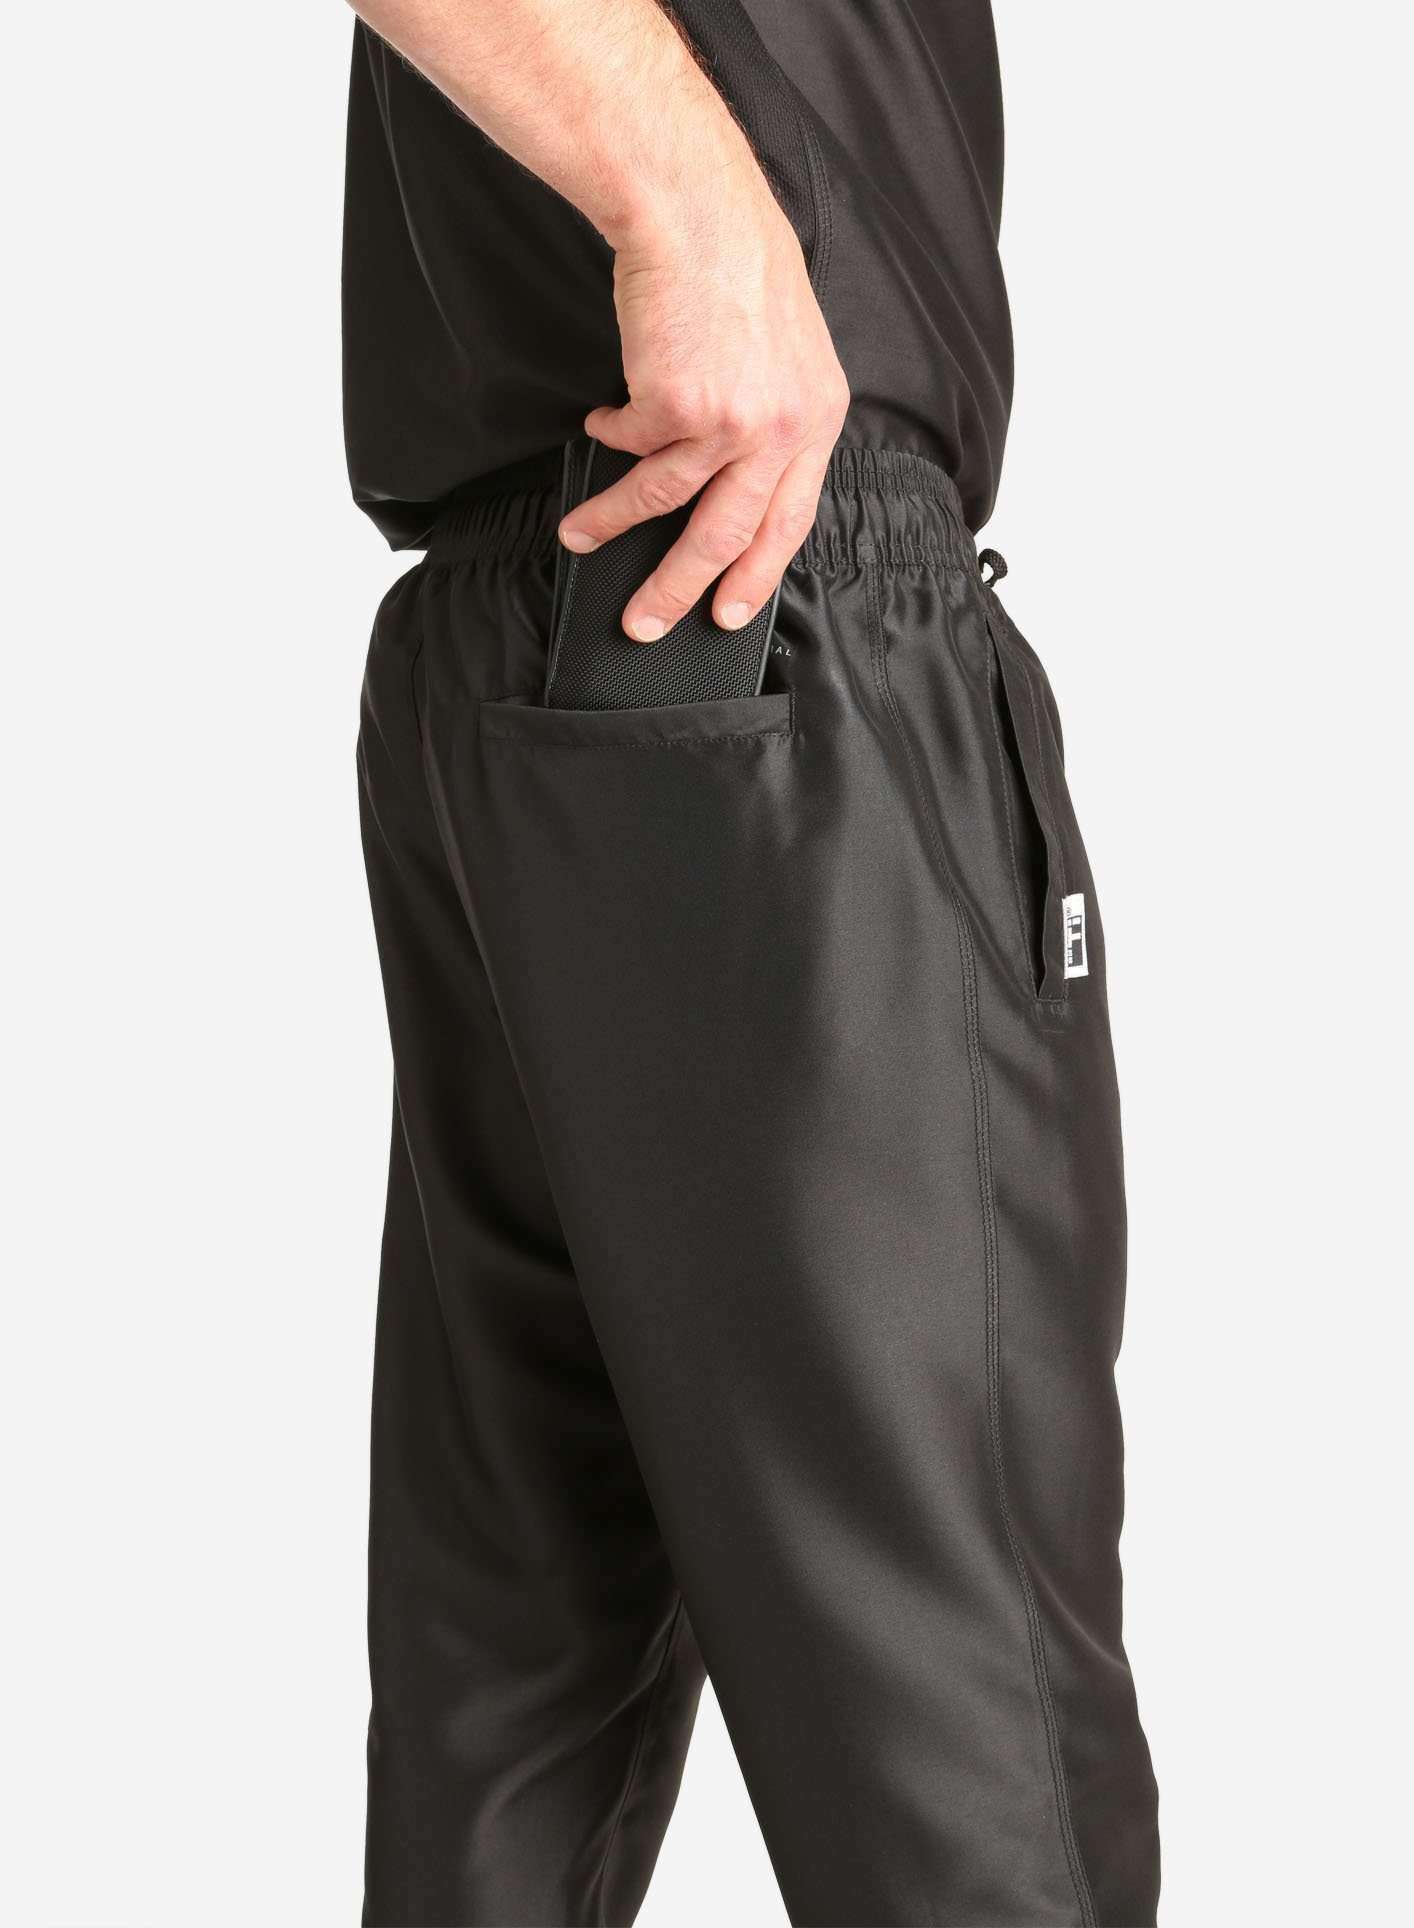 Men&#39;s Jogger Scrub Pants in Black Back Pocket Detail View